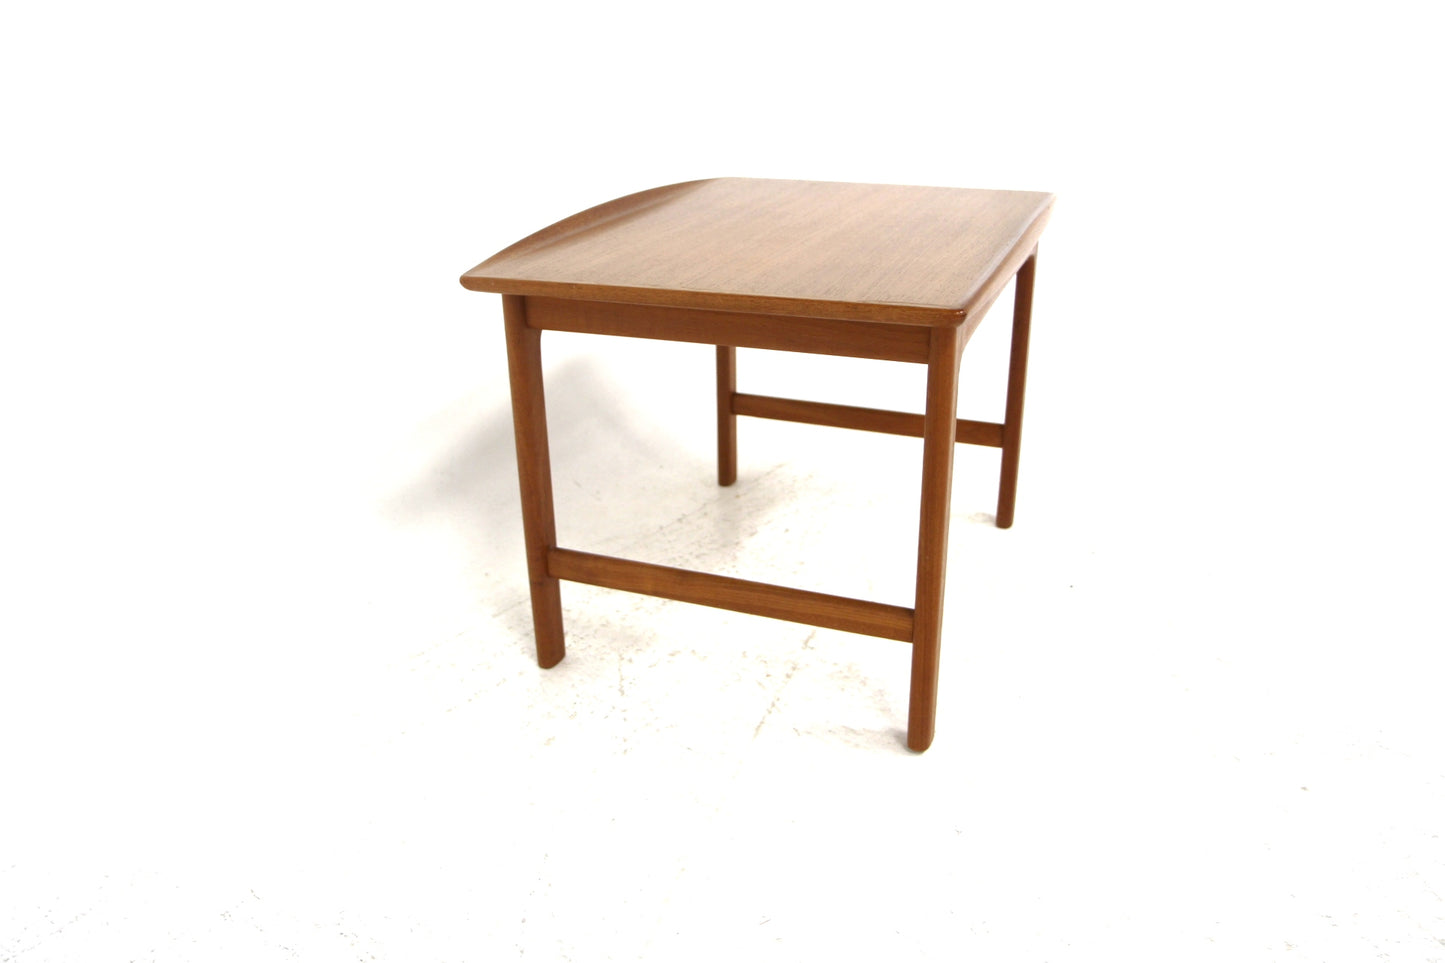 Tavolino "Frisco" Folke Ohlsson design svedese vintage anni 50 [sw22945]